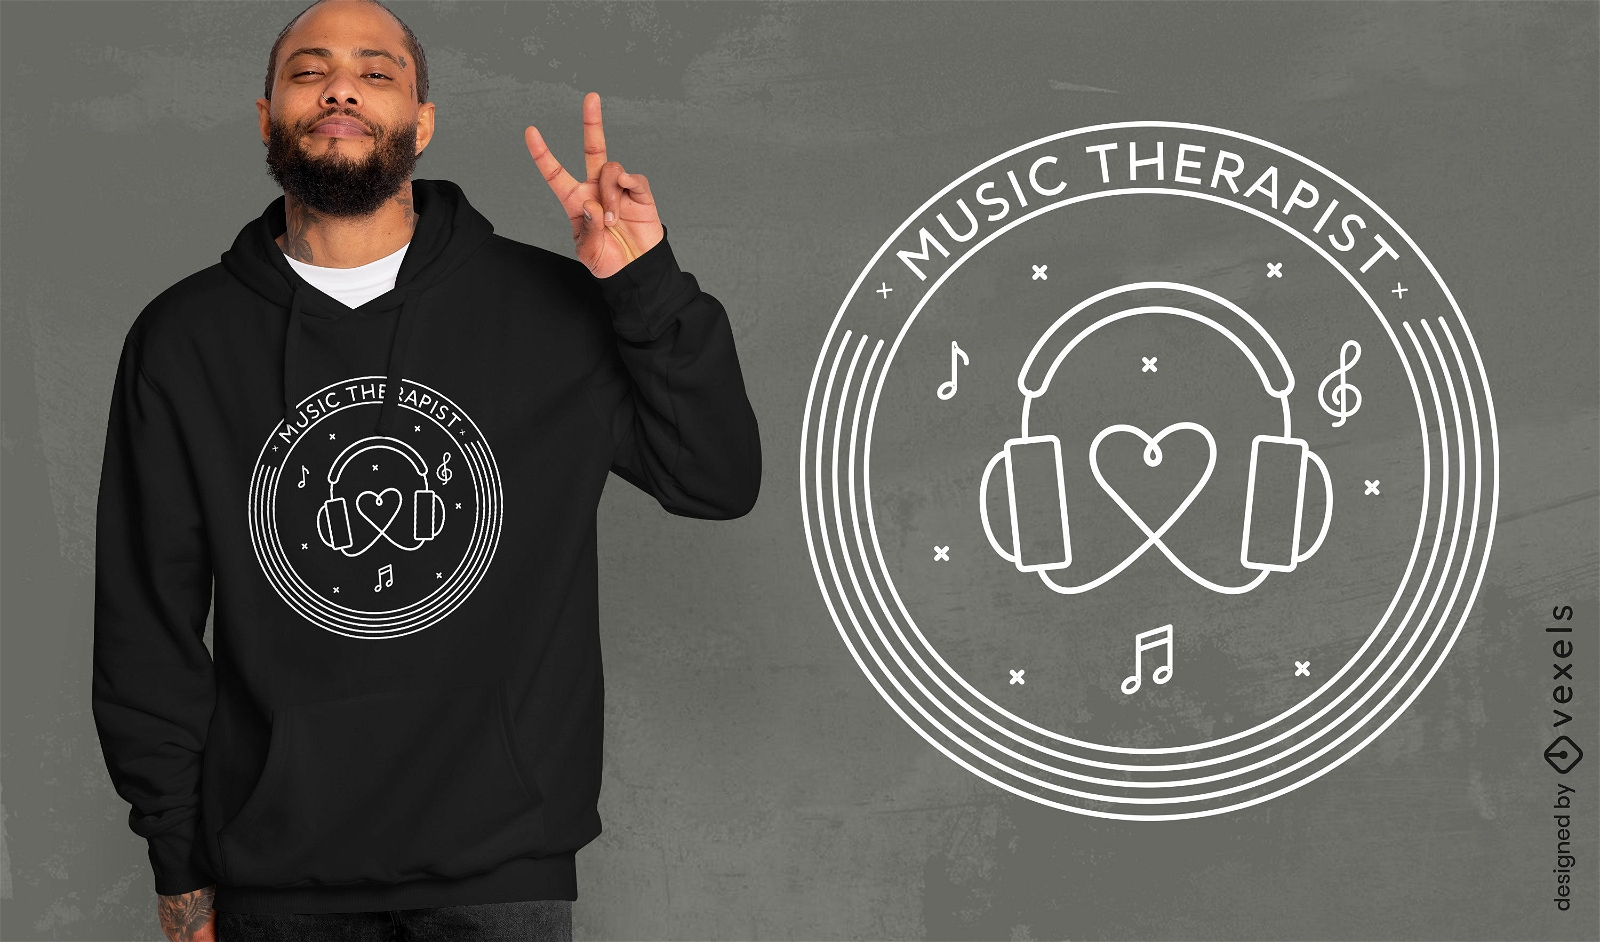 Music therapist t-shirt design